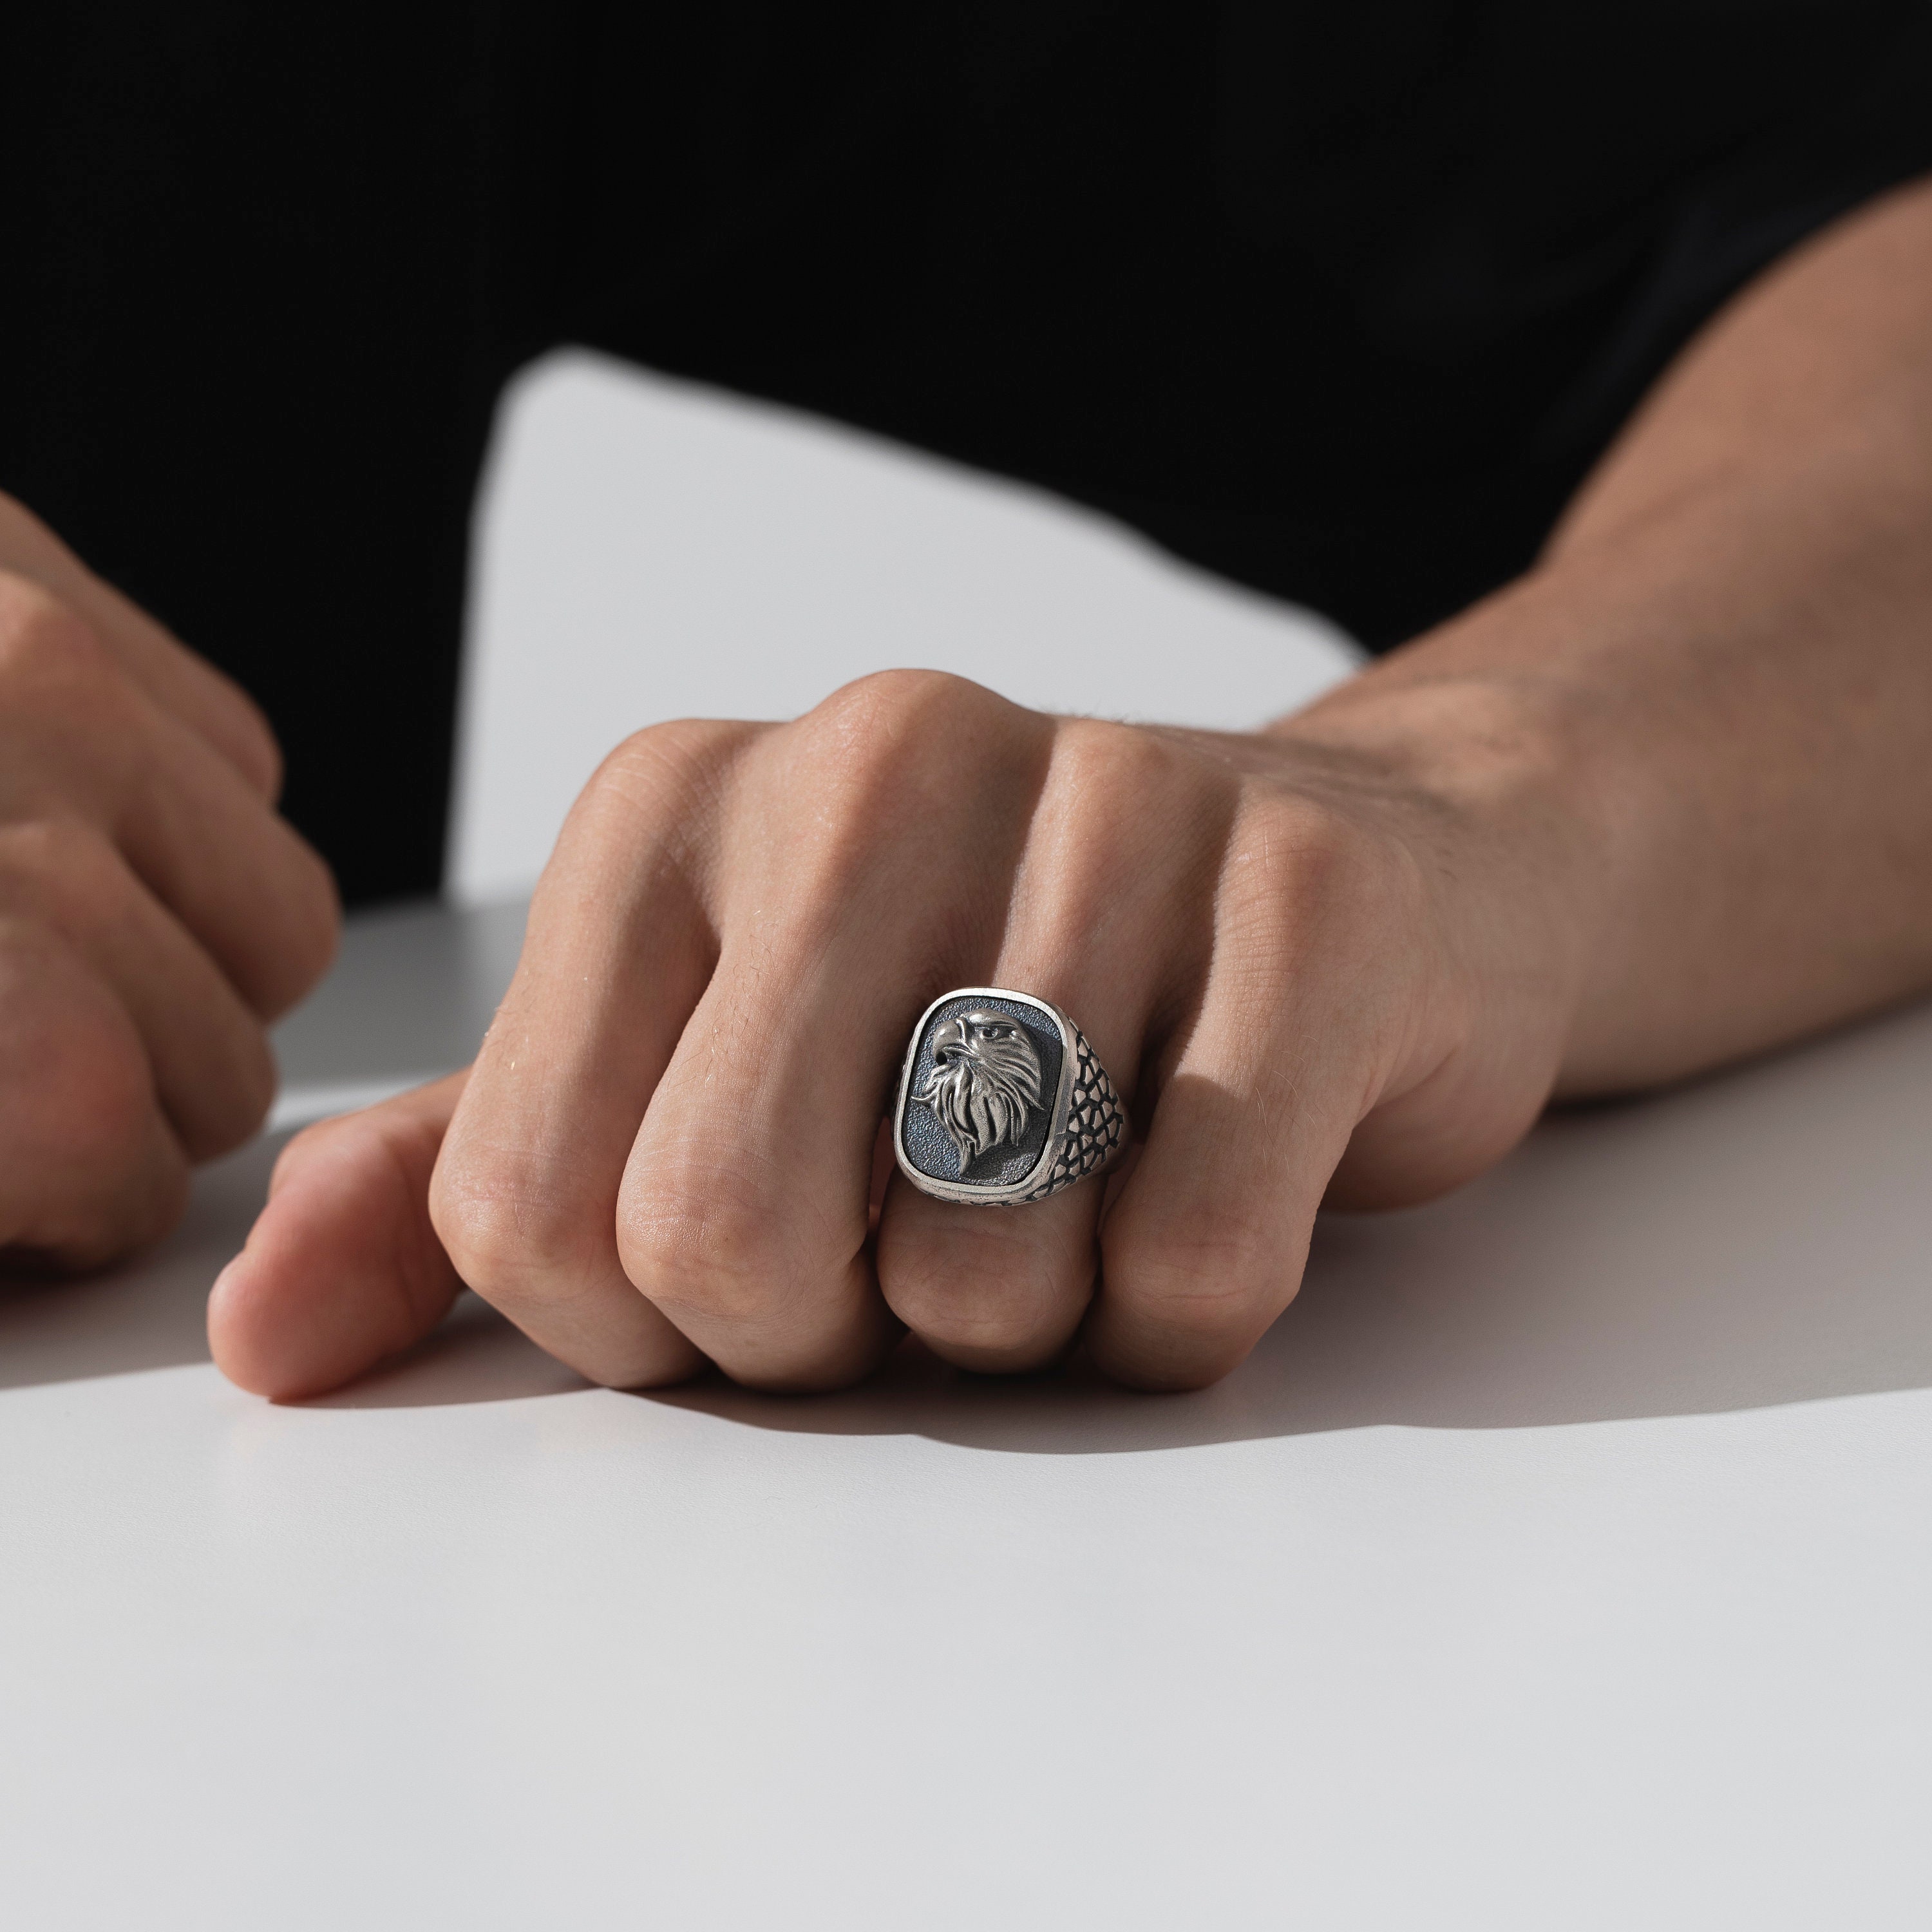 Hand-Engraved Eye Signet Ring – MAC Designs